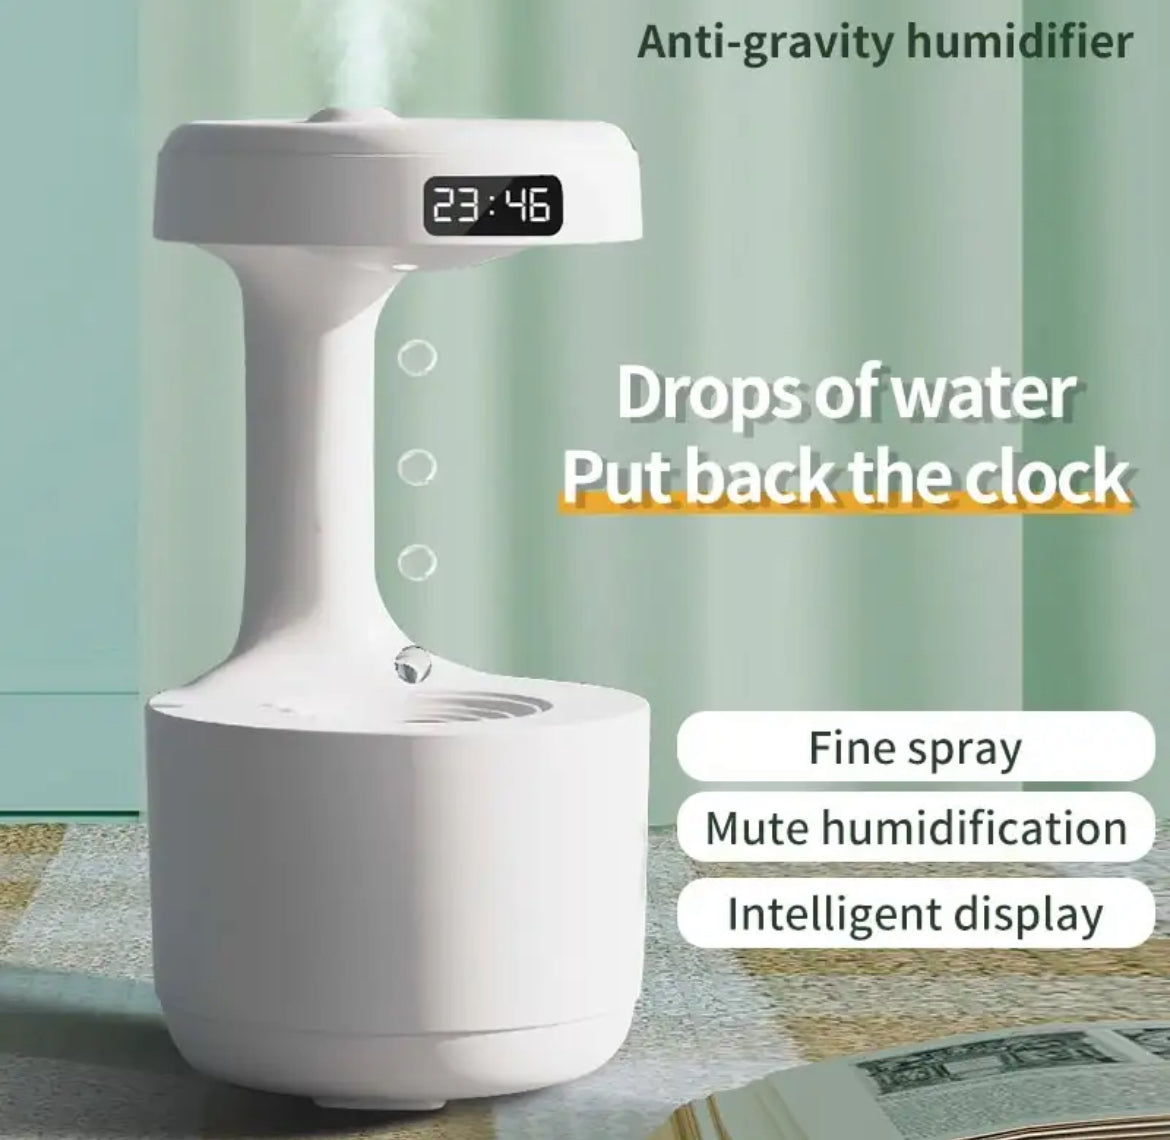 Anti-Gravity Humidifier